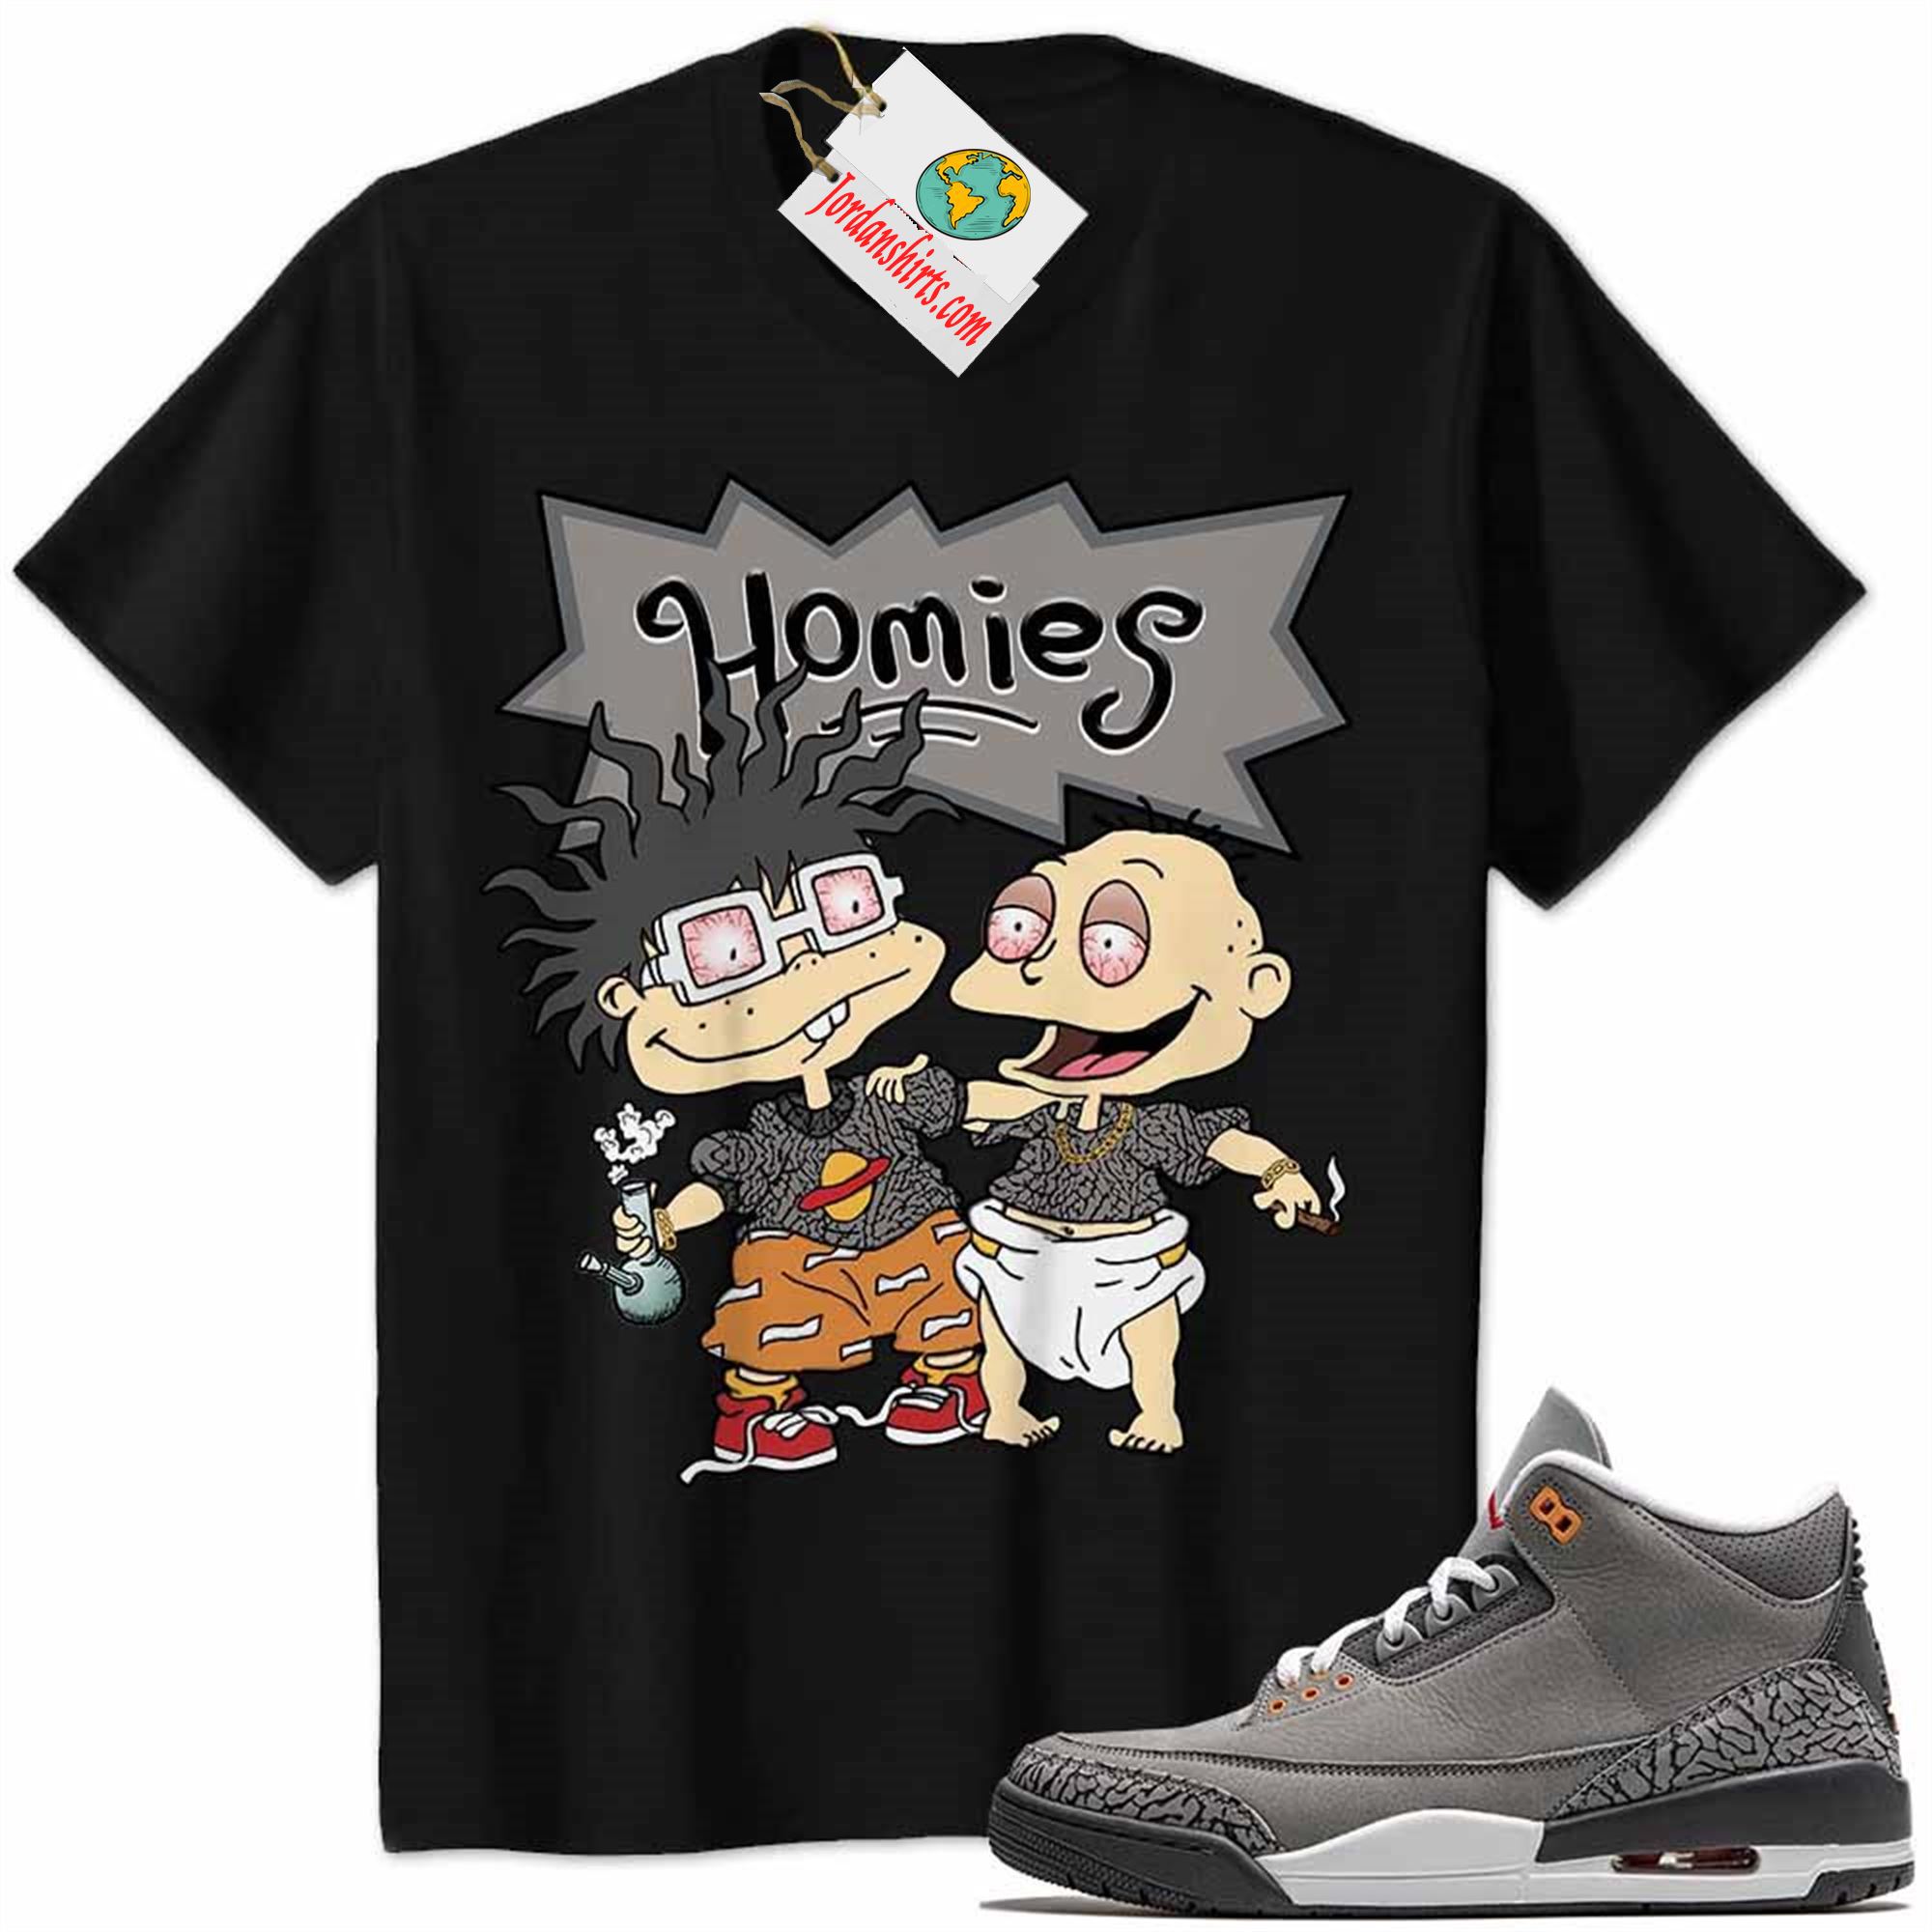 Jordan 3 Shirt, Jordan 3 Cool Grey Shirt Hommies Tommy Pickles Chuckie Finster Rugrats Black Size Up To 5xl